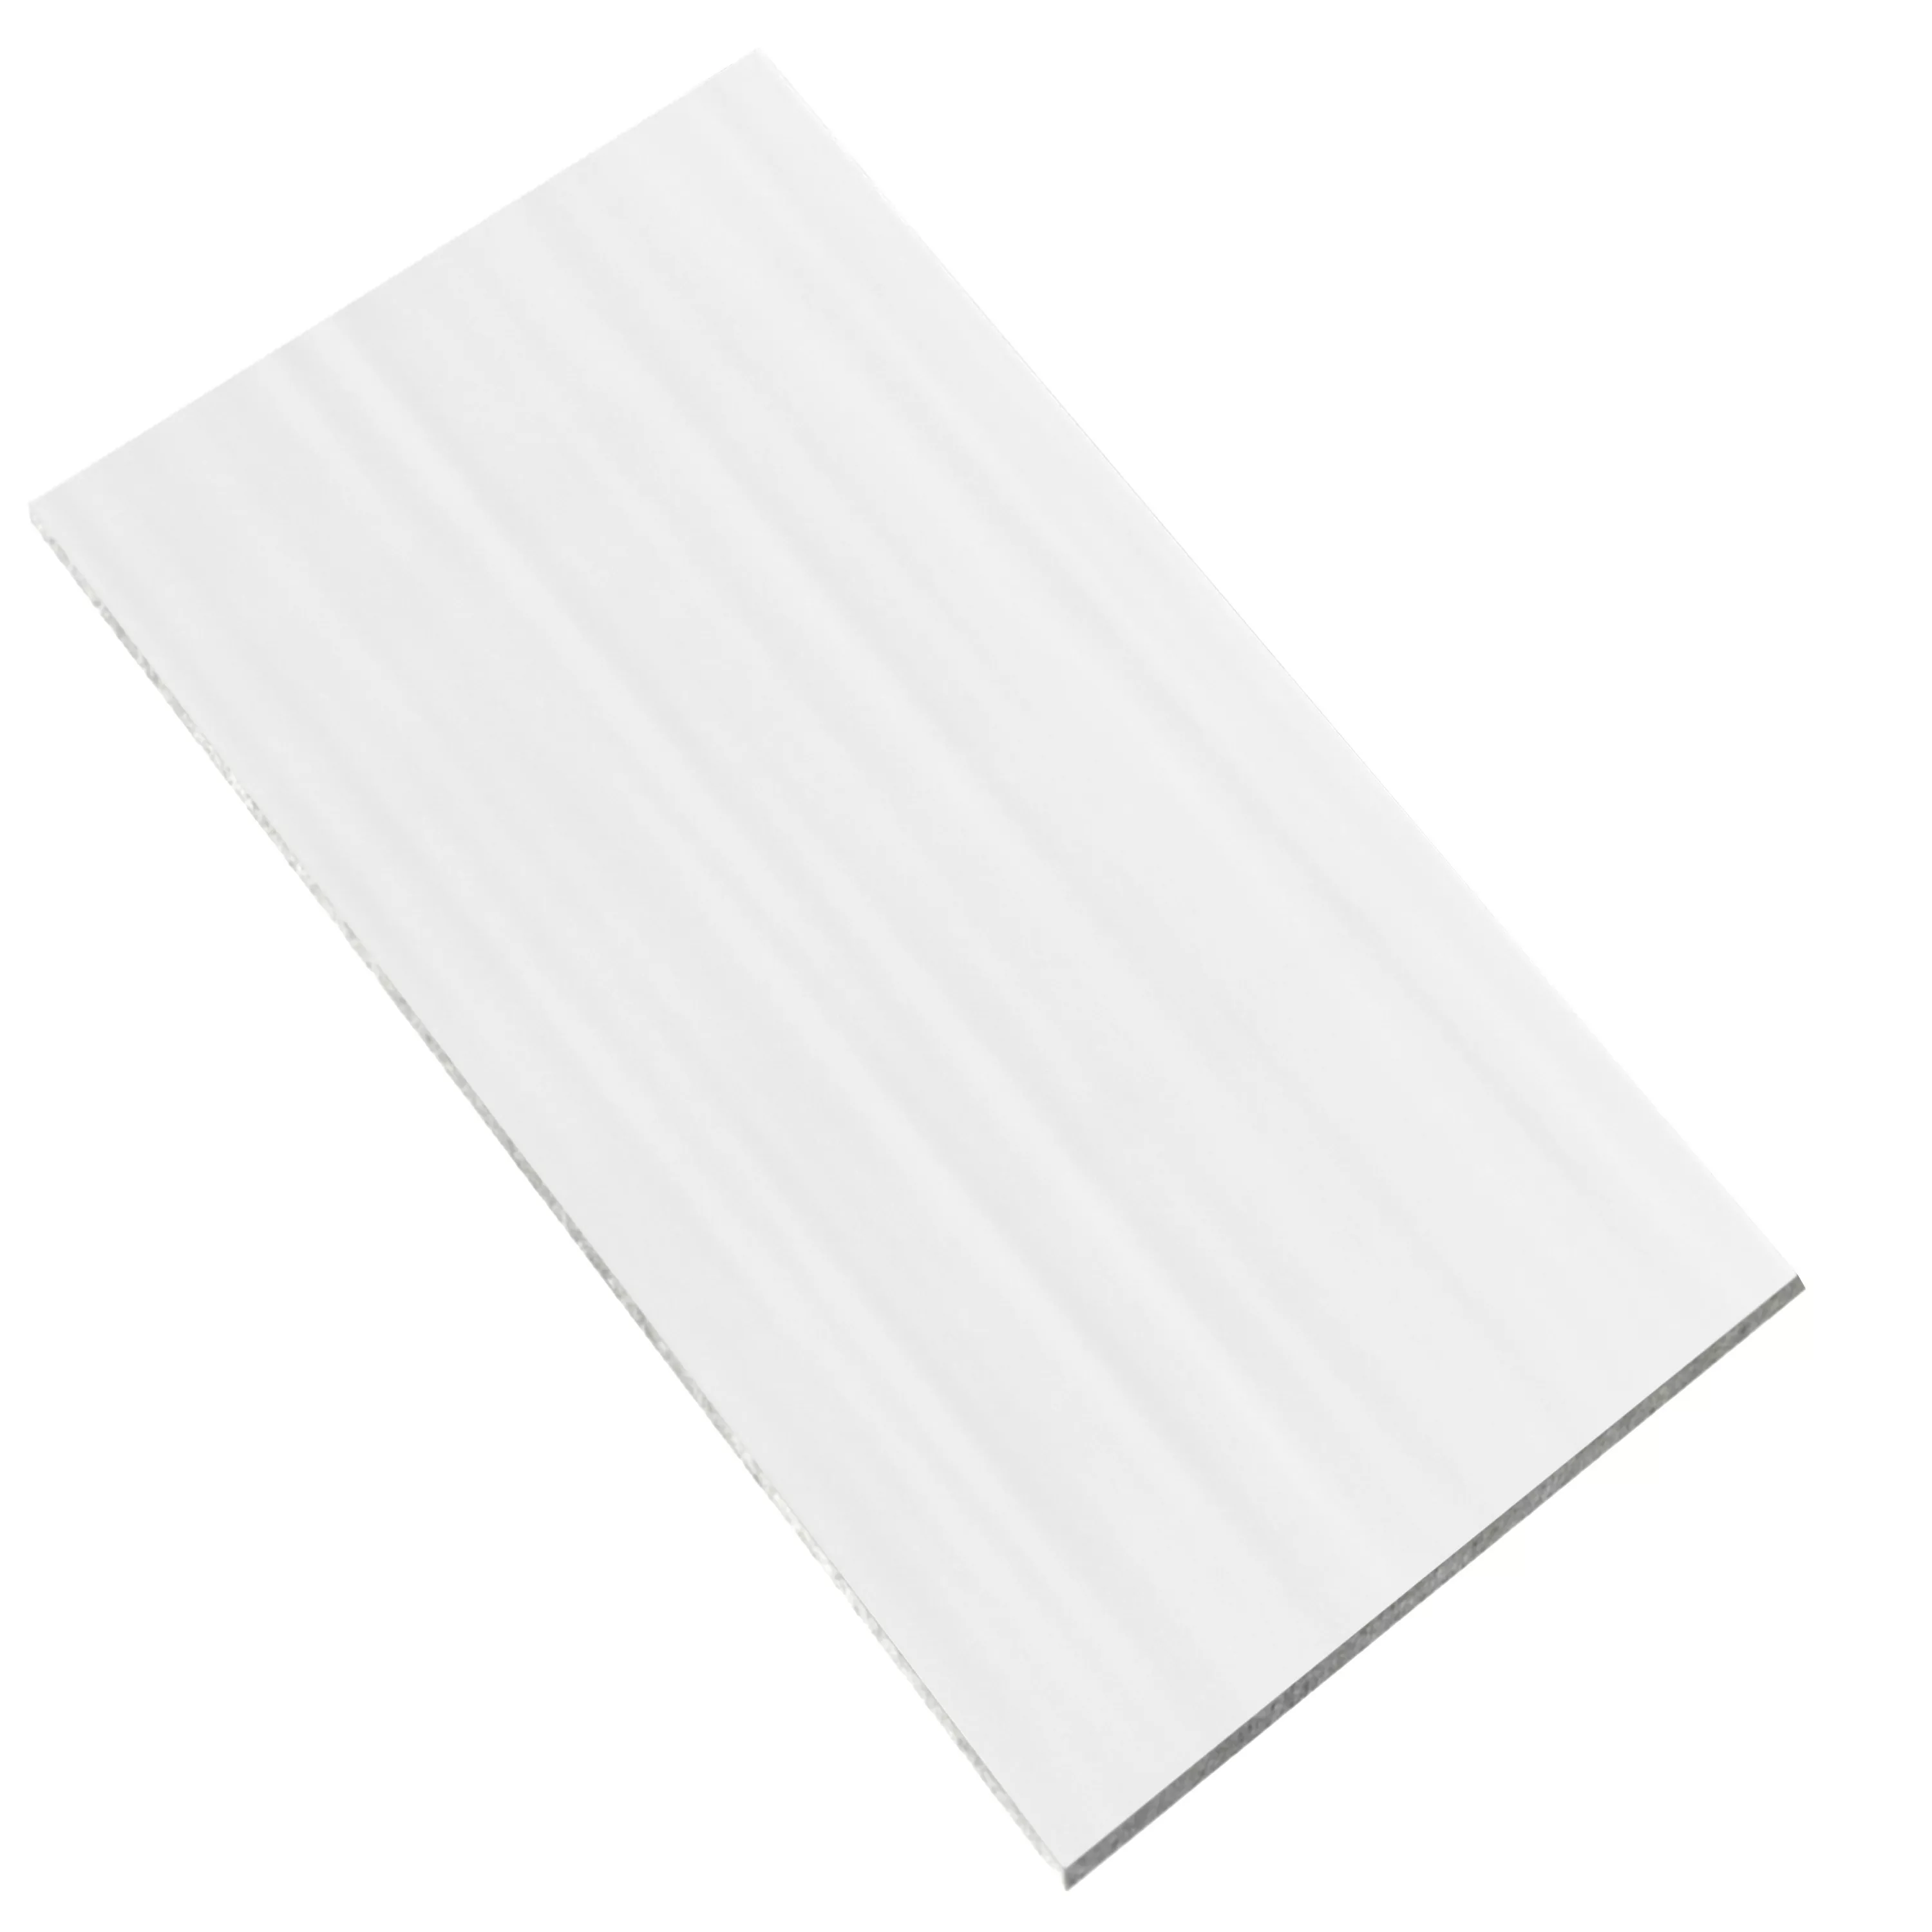 Sample Wall Tiles Richard Wave 30x60cm White Mat